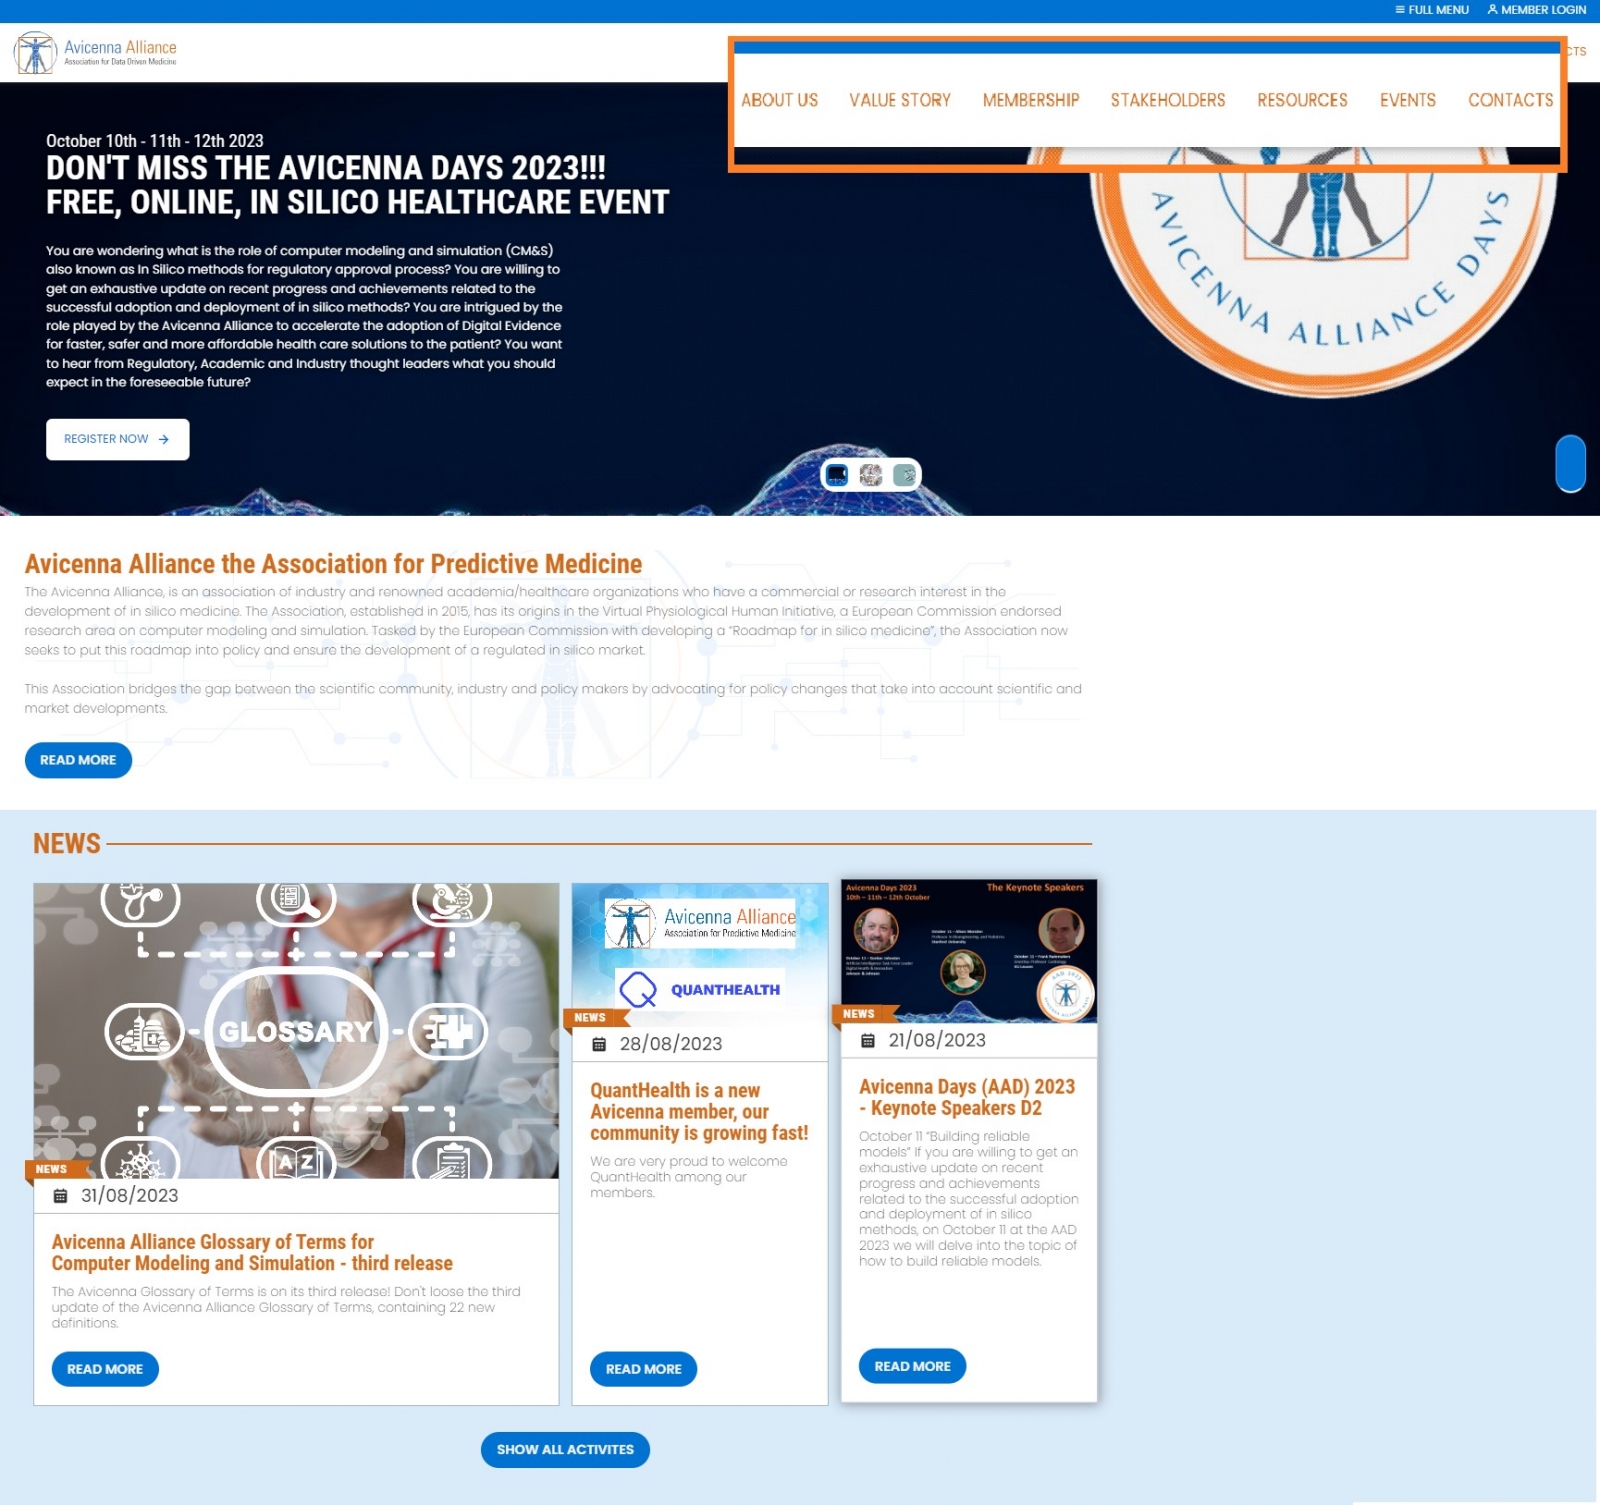 The Avicenna Alliance website sports a brand new look!